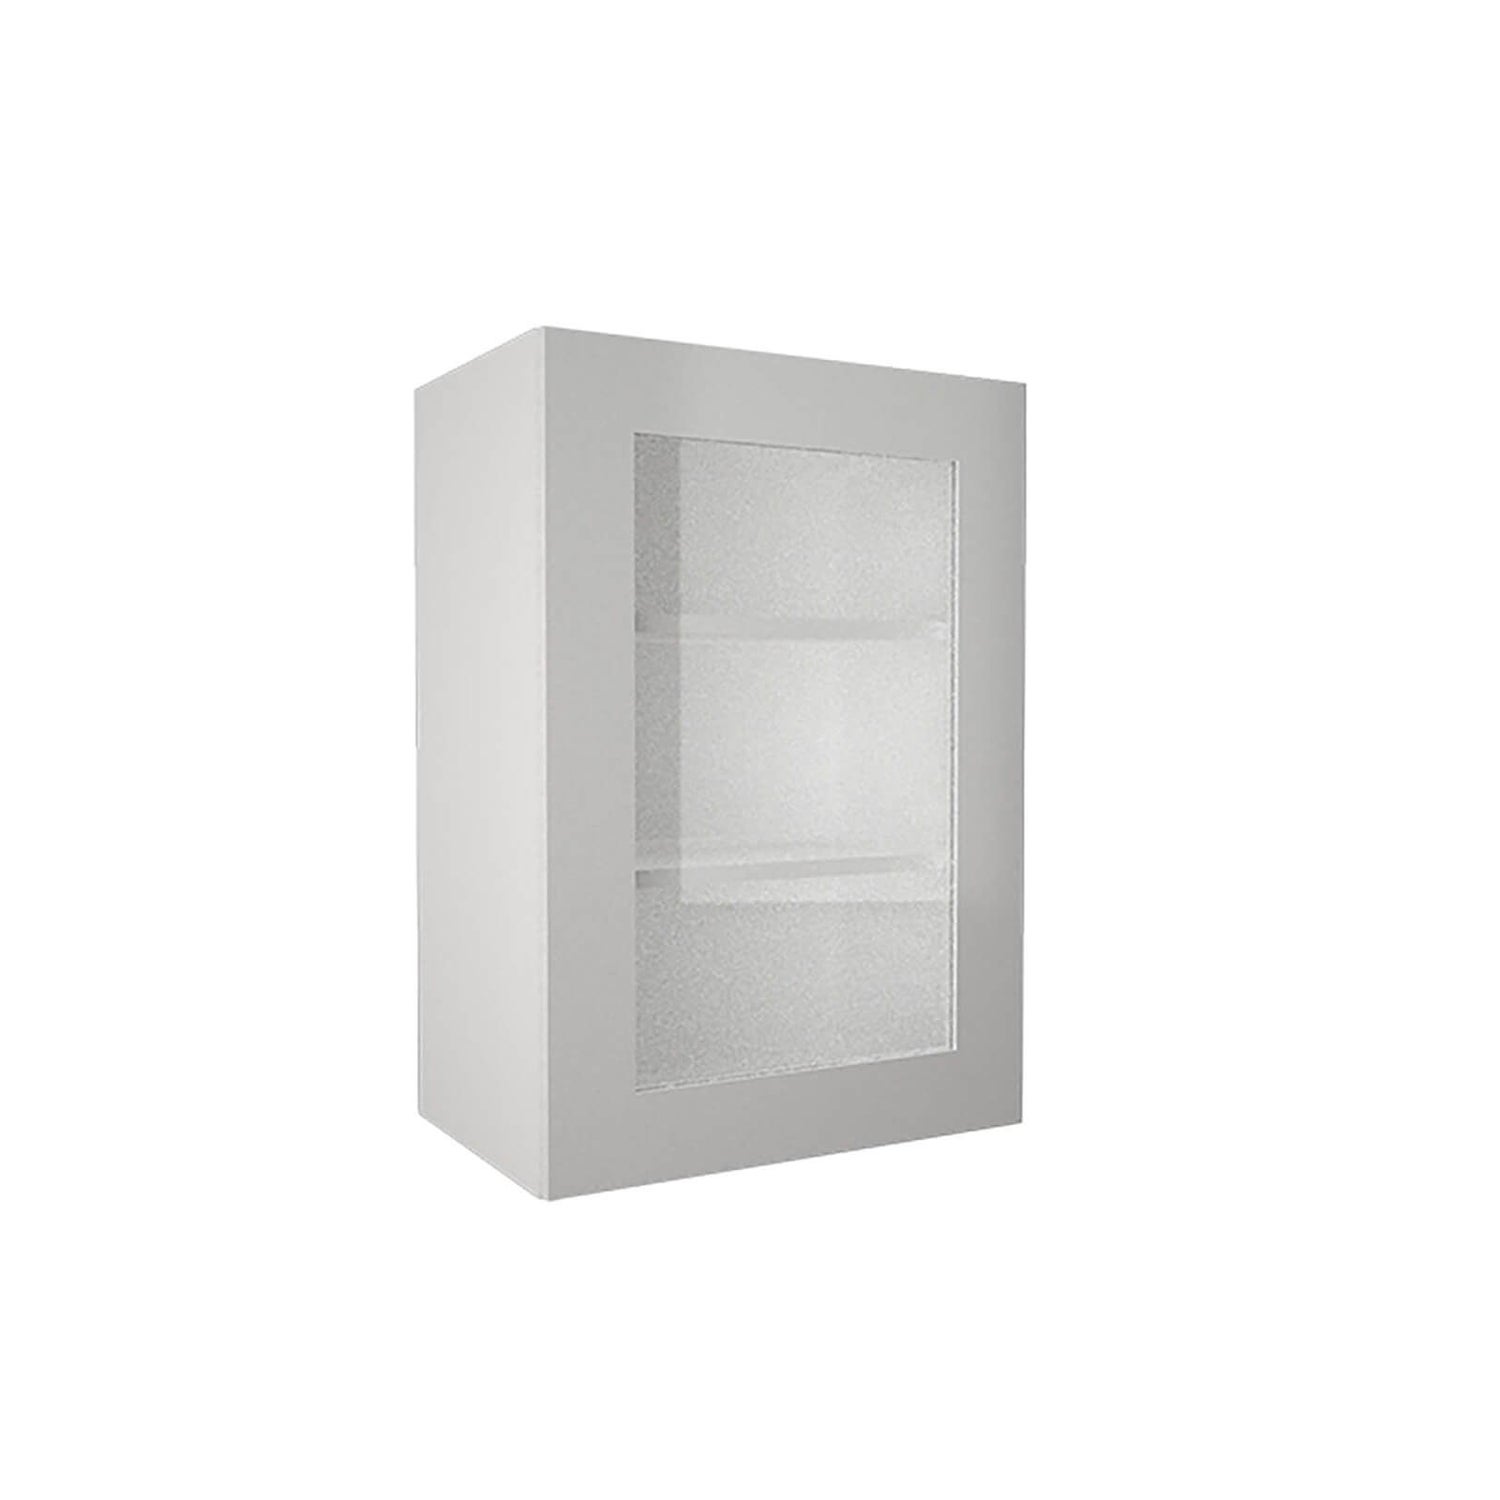 Gloss Slab White 500mm Glass Wall Unit, White Gloss Kitchen Wall Display Cabinet